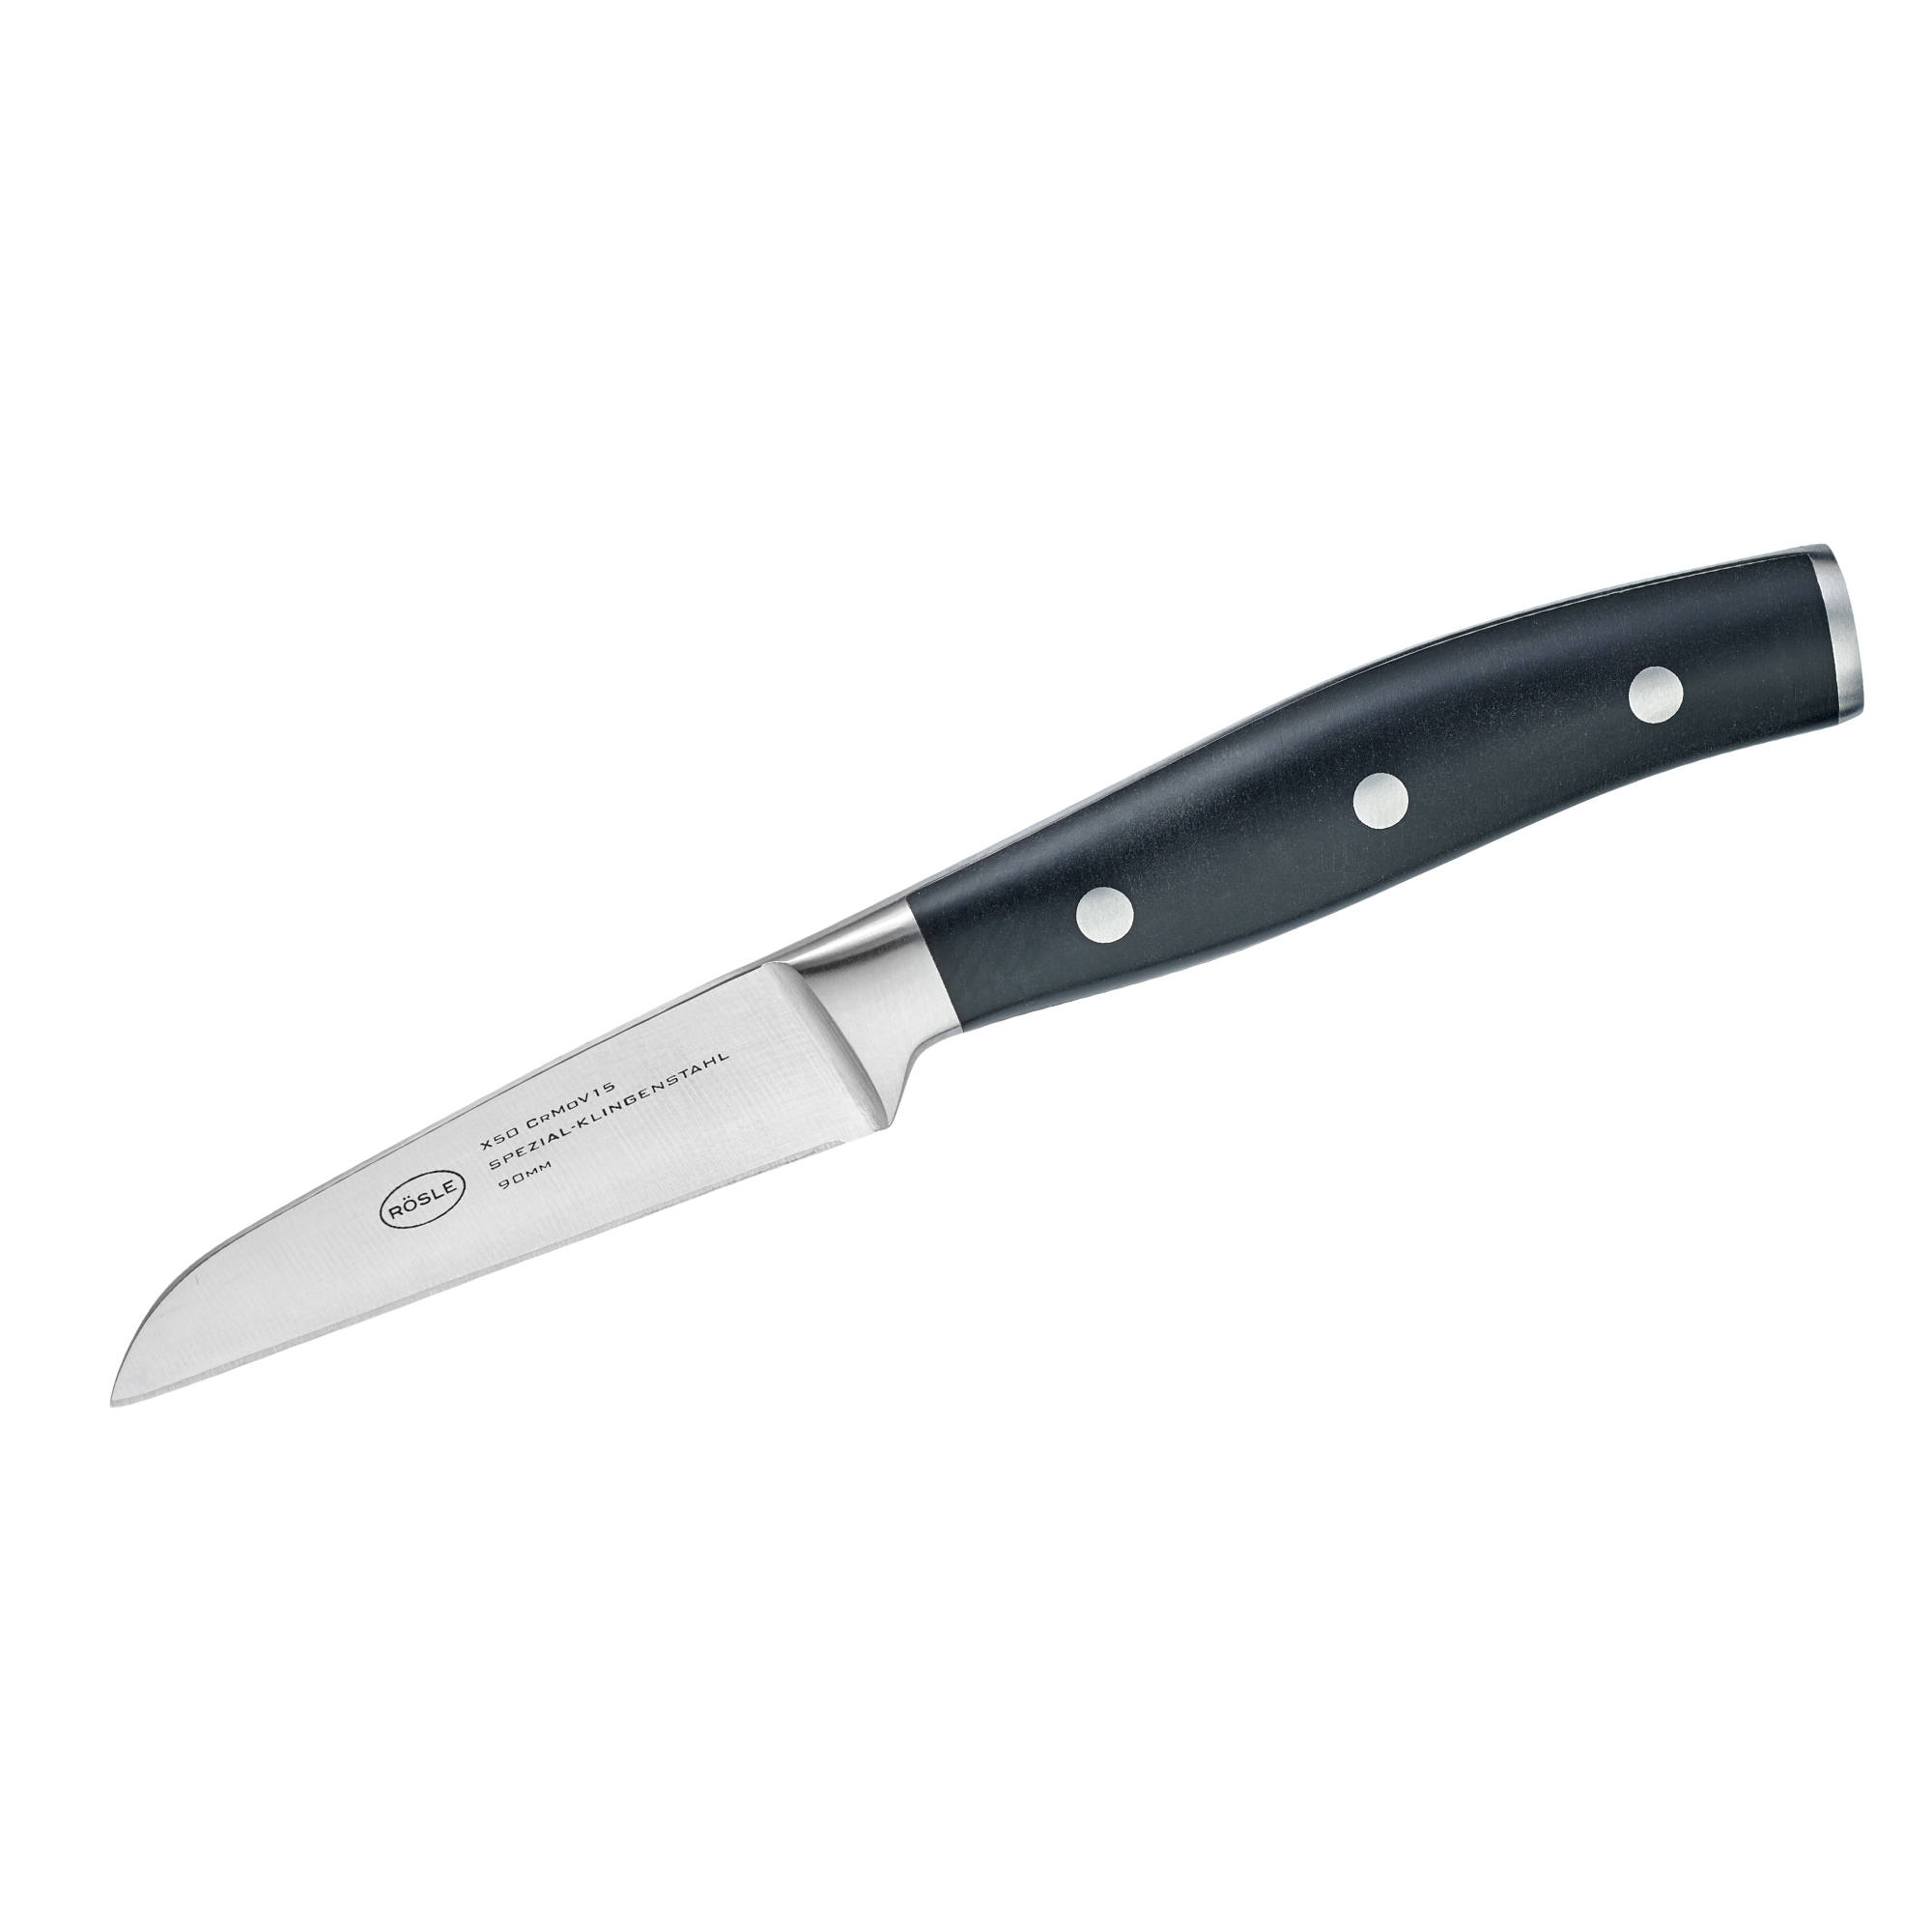 Vegetable knife Tradition 9 cm